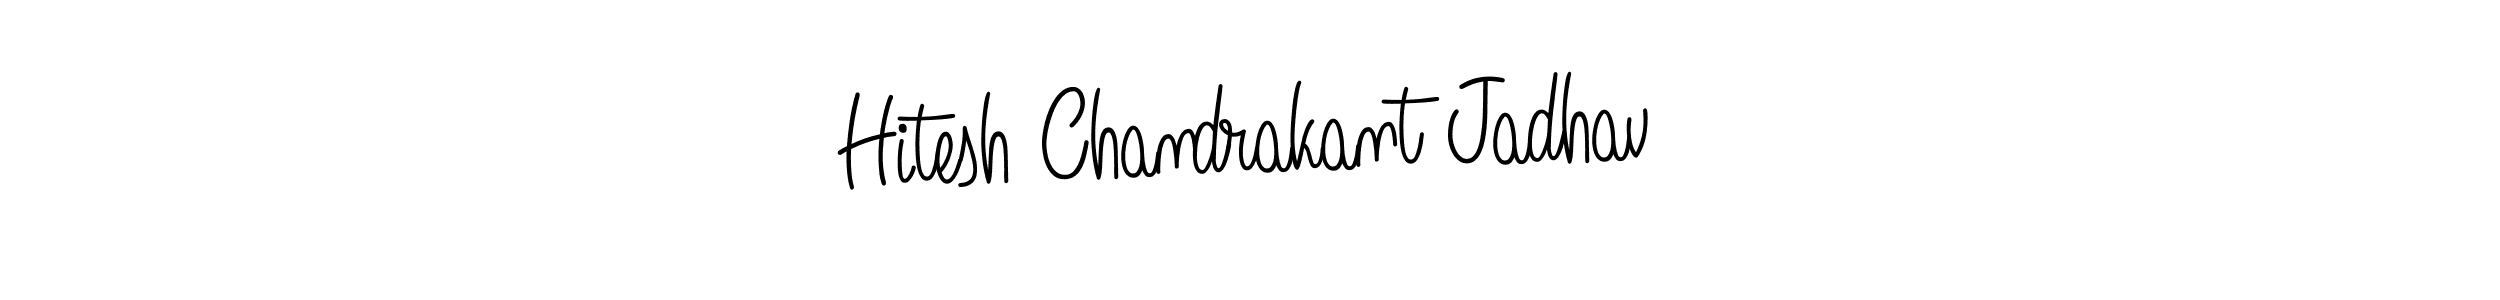 Best and Professional Signature Style for Hitesh Chandrakant Jadhav. Angelique-Rose-font-FFP Best Signature Style Collection. Hitesh Chandrakant Jadhav signature style 5 images and pictures png